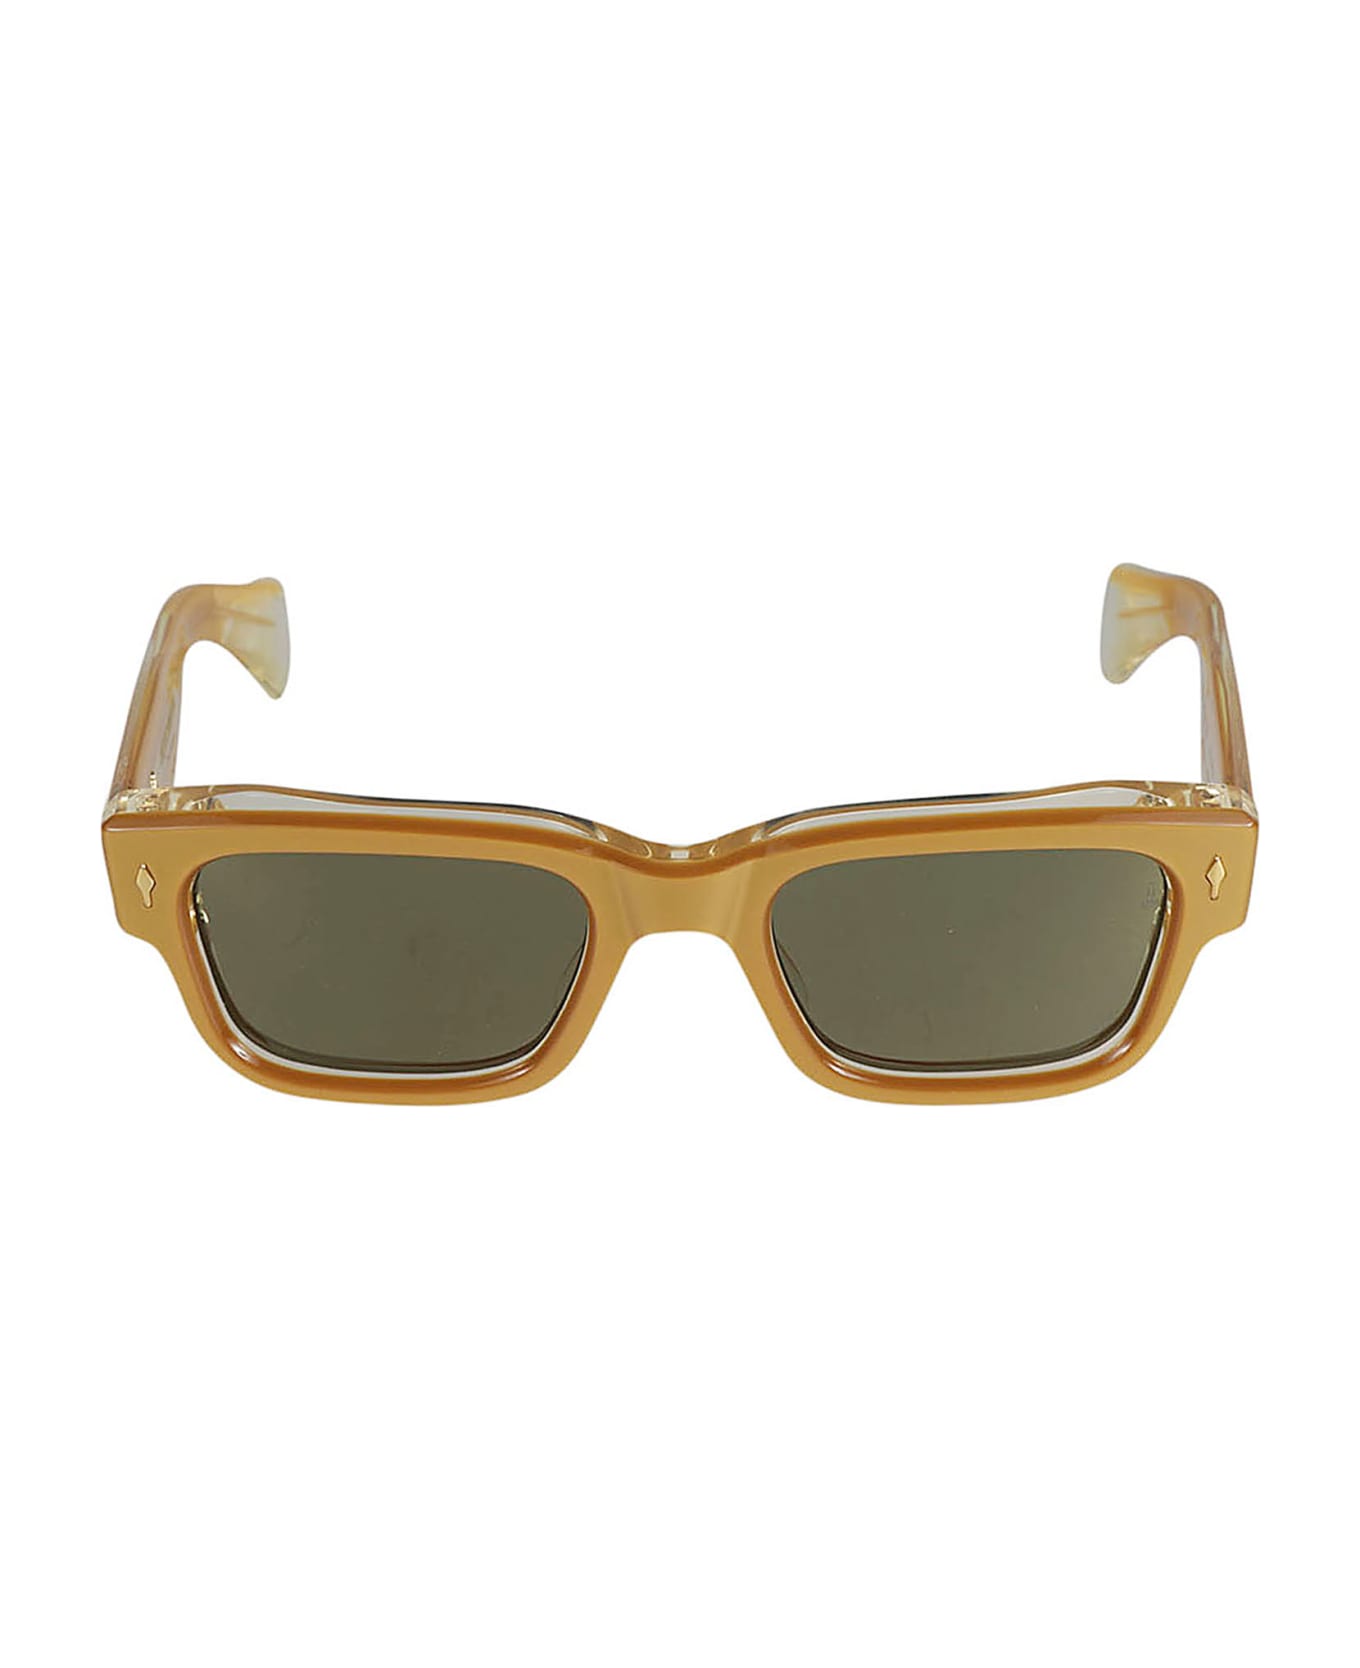 Vans Dunville sunglasses in tortoise shell print Jeff Sunglasses - gold